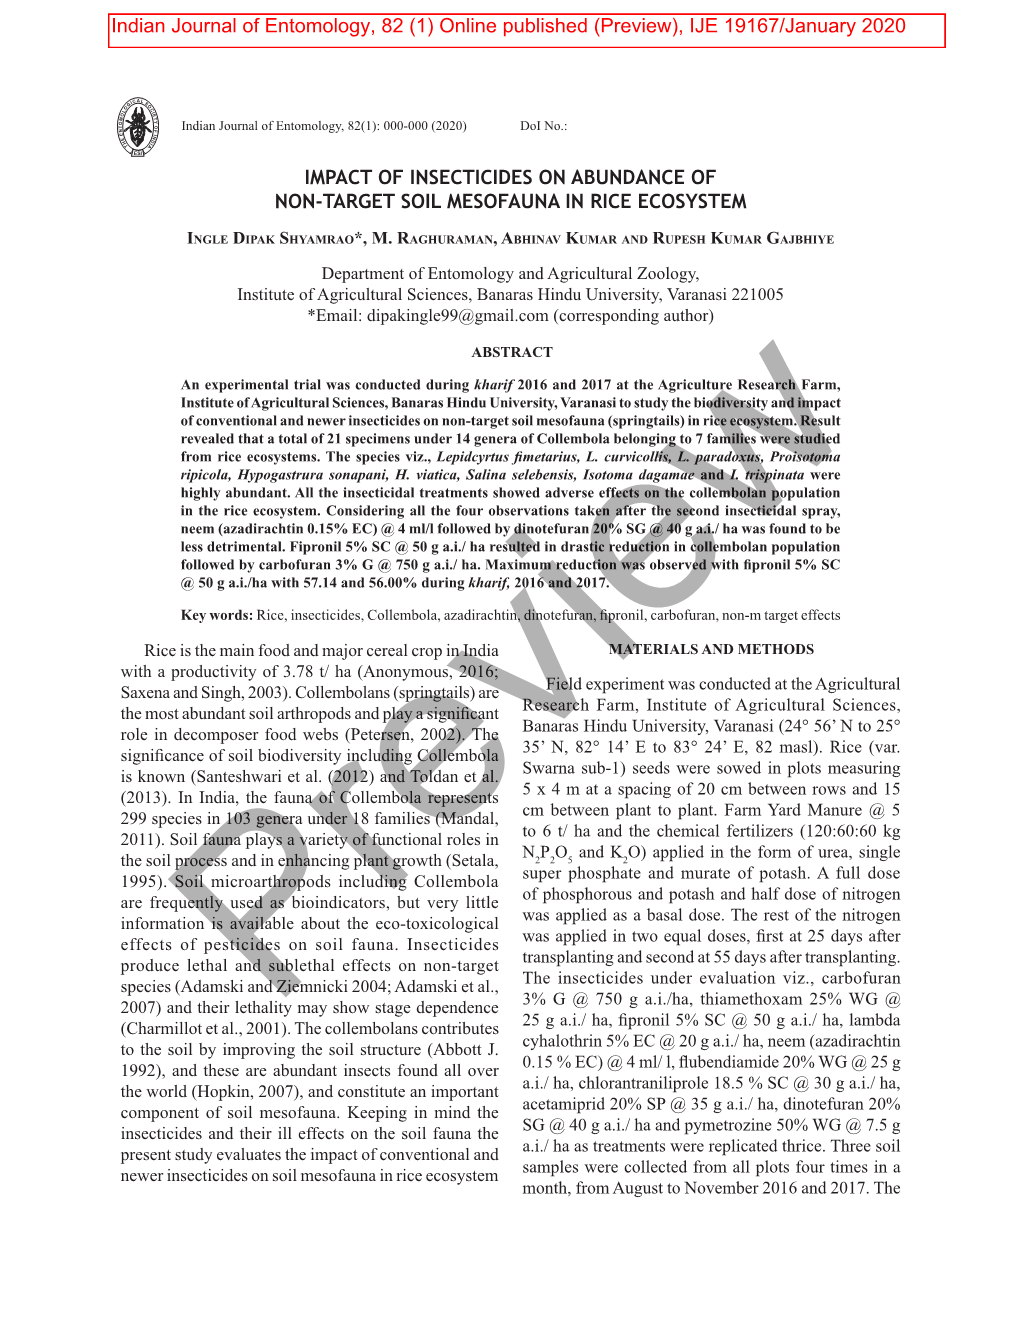 IMPACT of INSECTICIDES on ABUNDANCE of NON-TARGET SOIL MESOFAUNA in RICE ECOSYSTEM E:\ 82(1) 19167-Ingle Dipak Shyamrao 2020